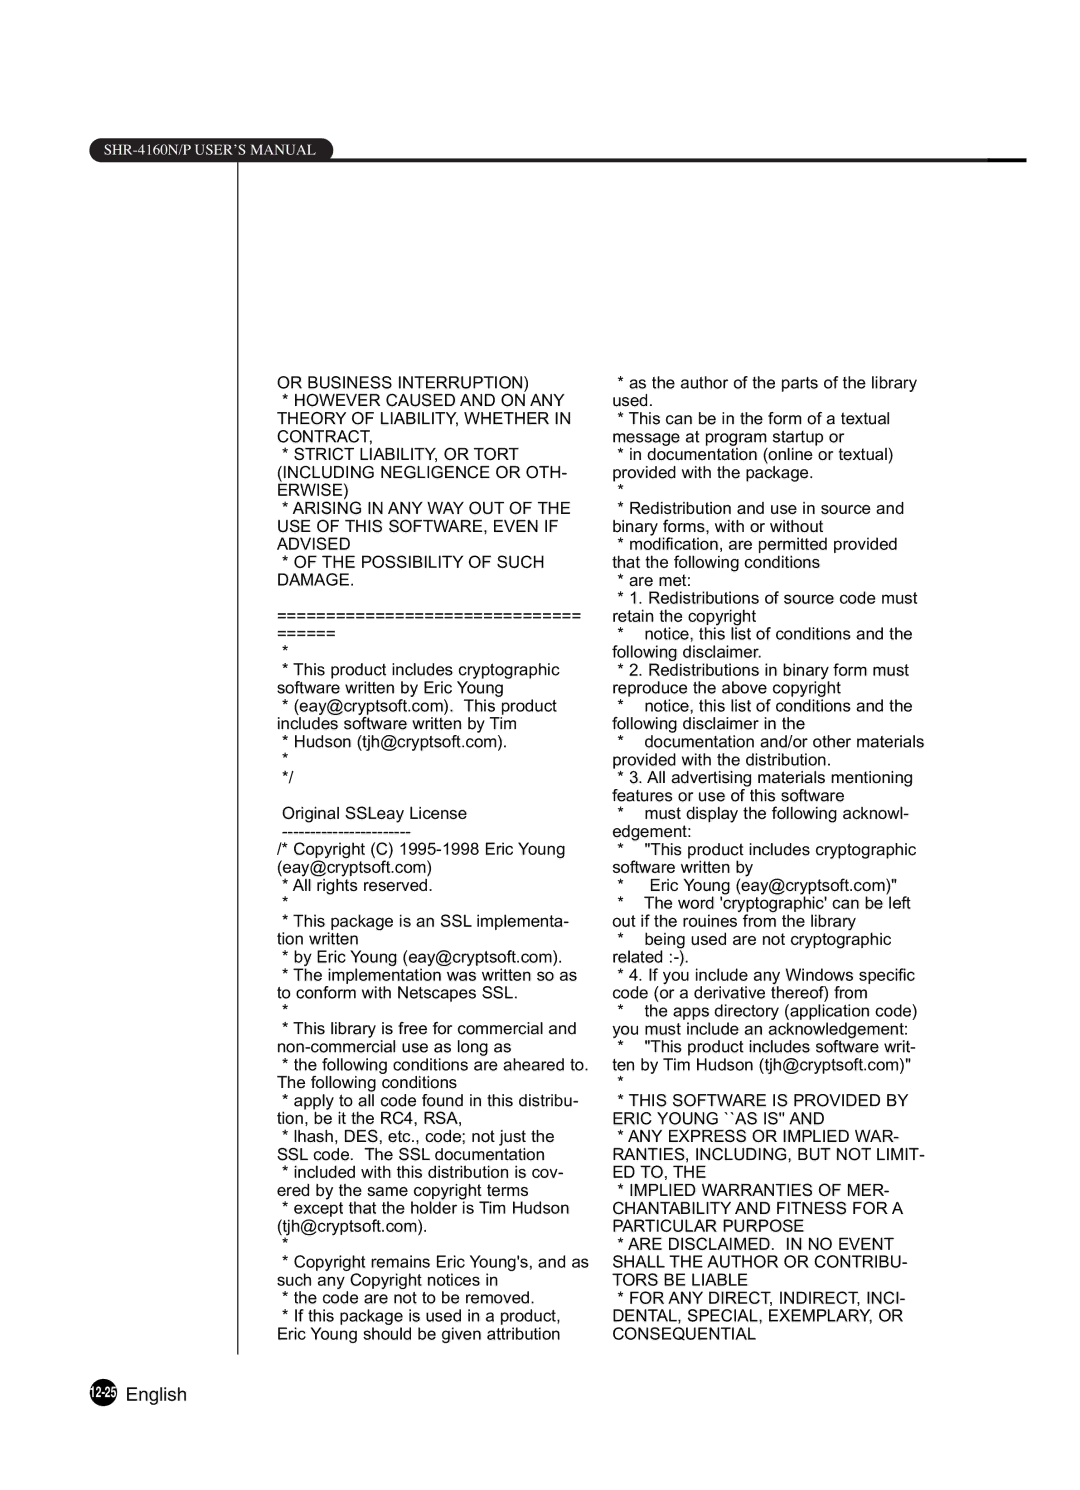 Samsung SHR-4160P manual 12-25English 